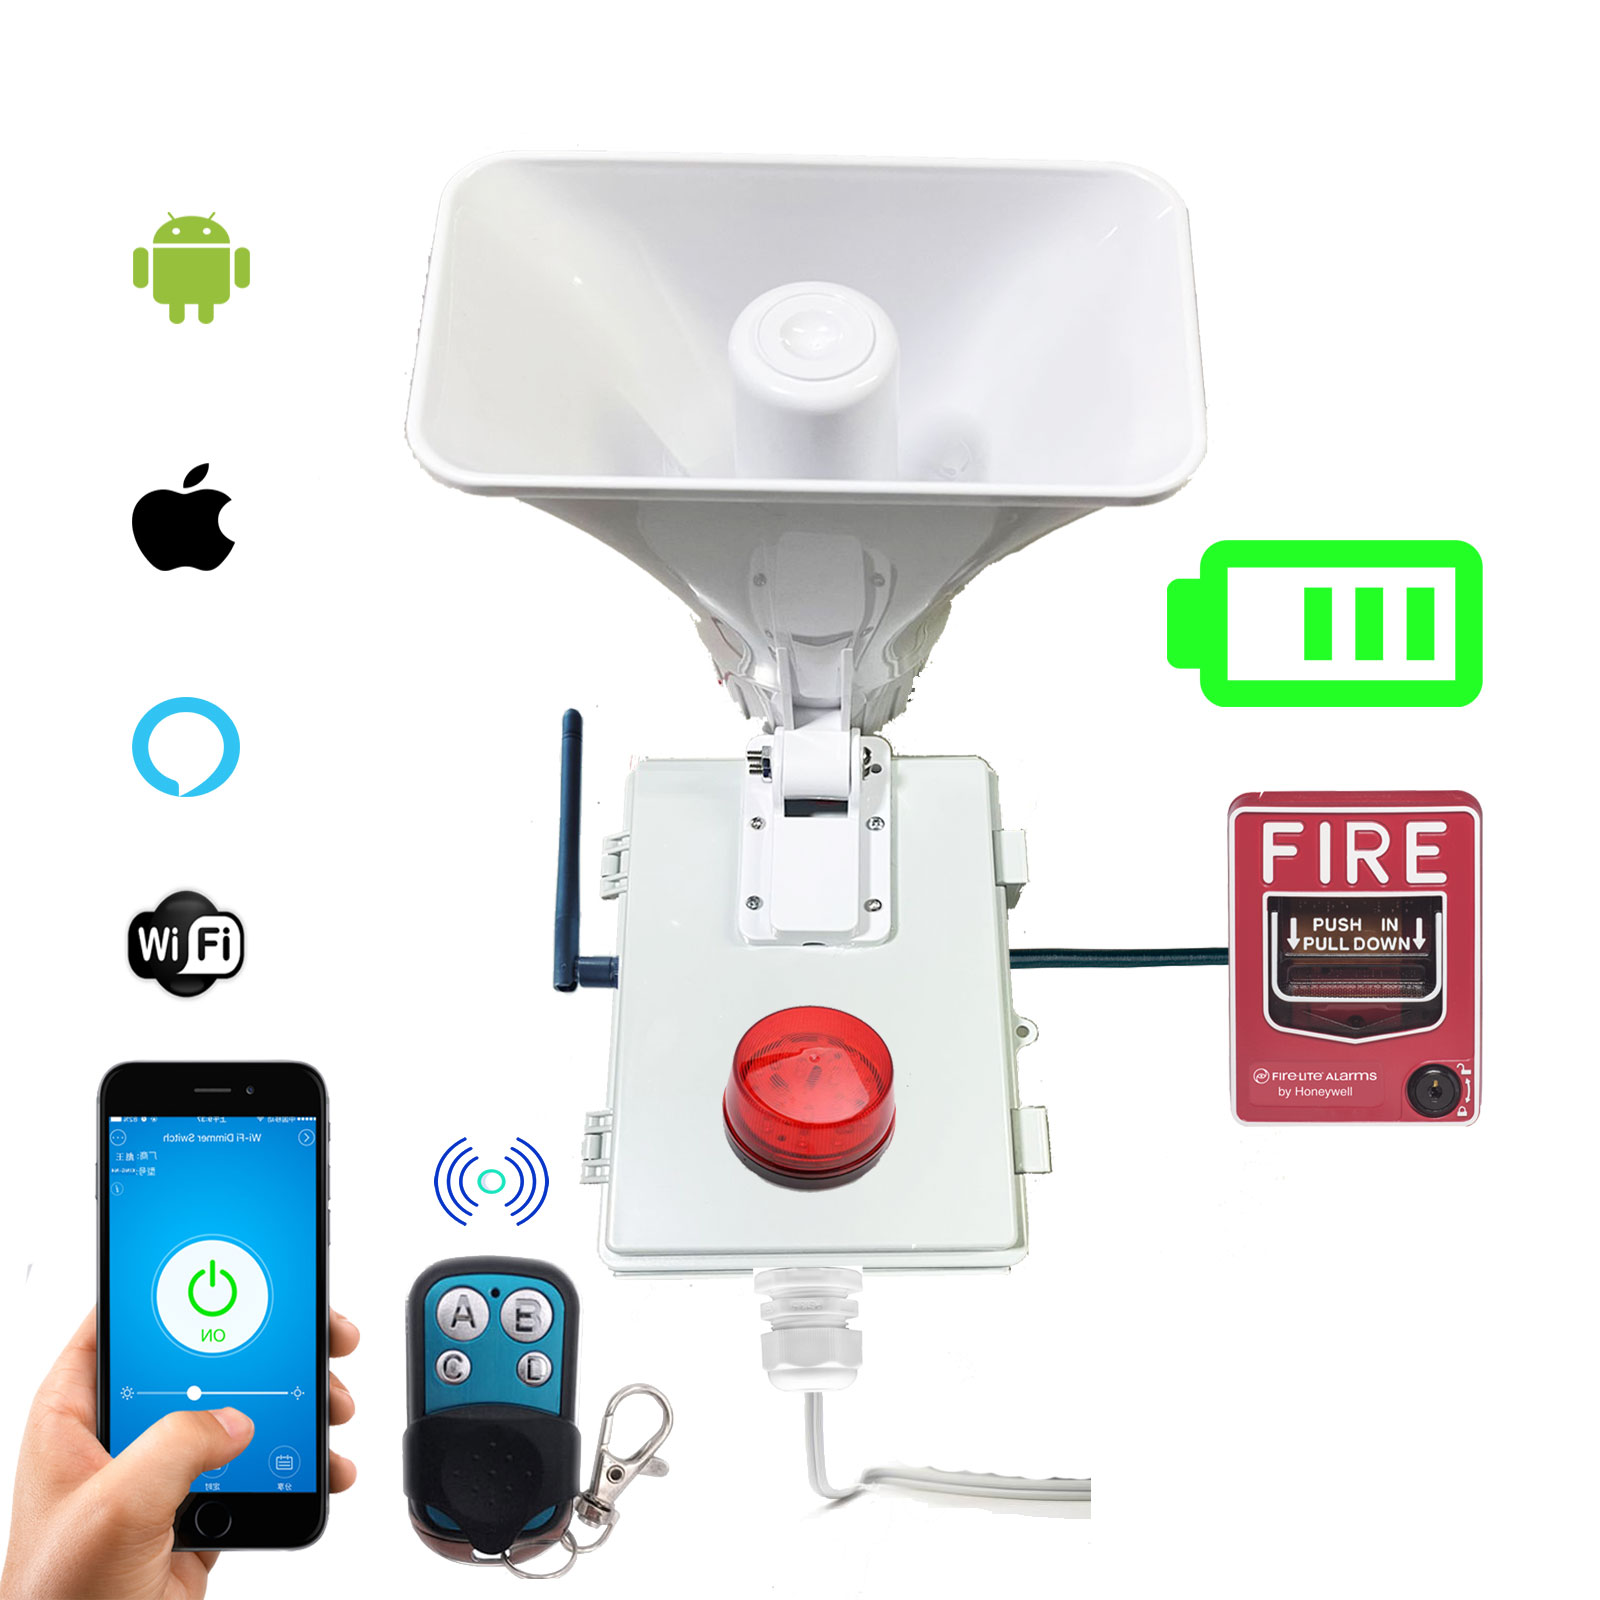 Alarma Vecinal Wifi Rf Boton Fire Con Bateria App Android Io